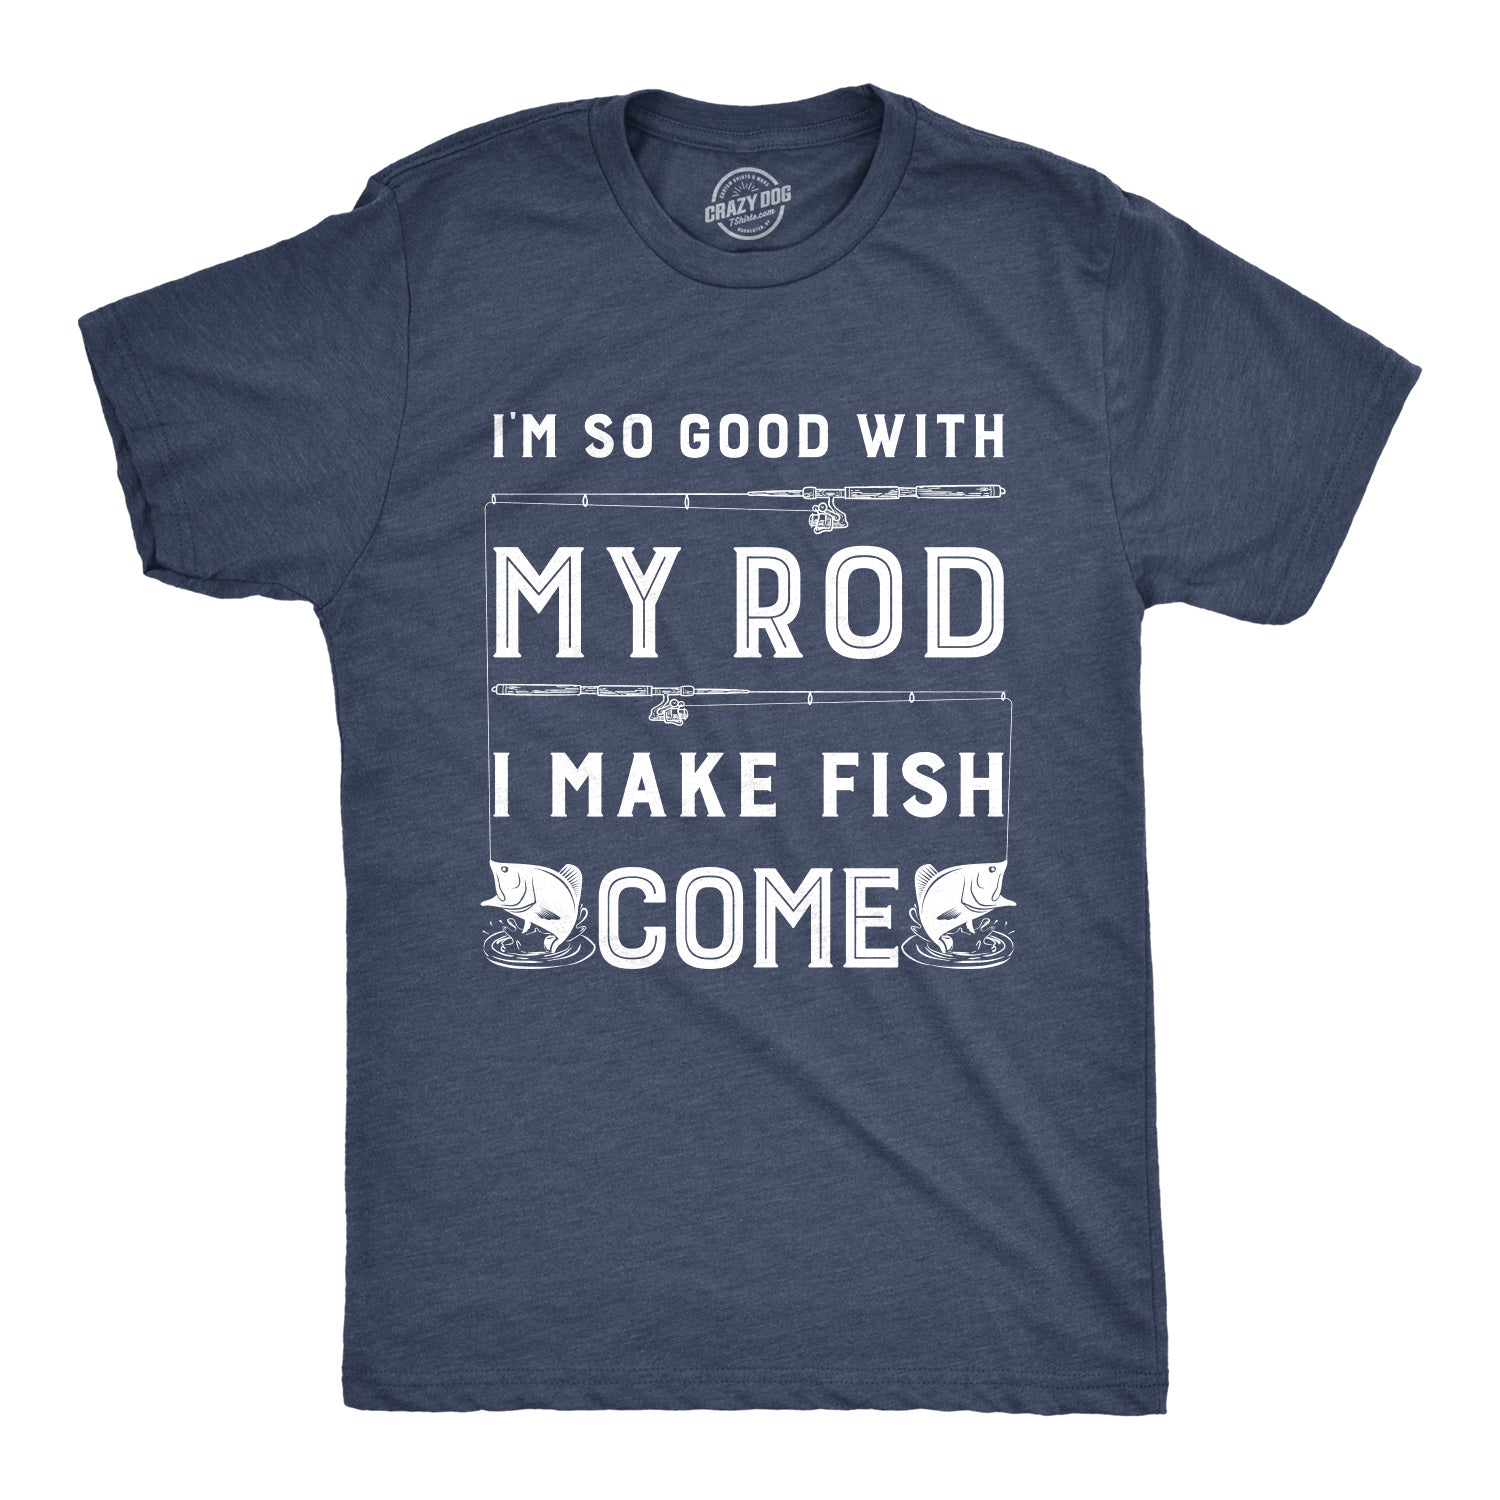 Mens Reel Cool Grandpa T Shirt Funny Sarcastic Fishing Joke Pole